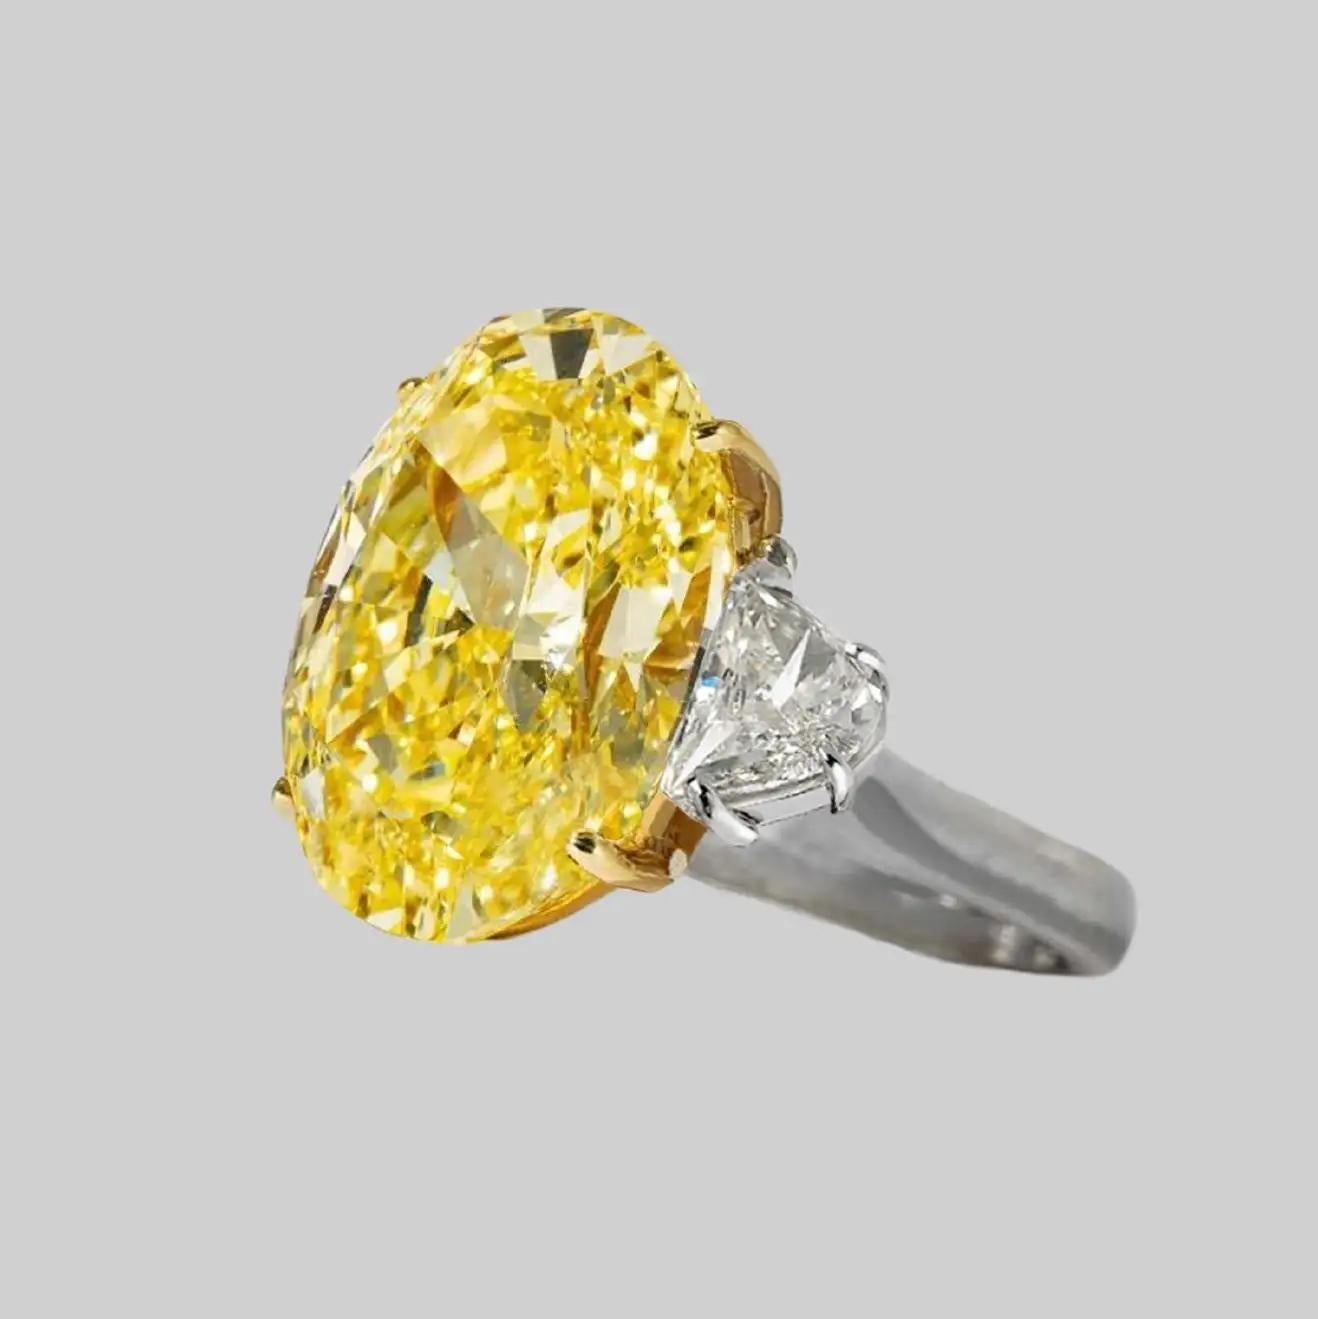 GIA Certified 5 Carat Fancy Light Yellow Oval Diamond Ring
VS2 clarity 